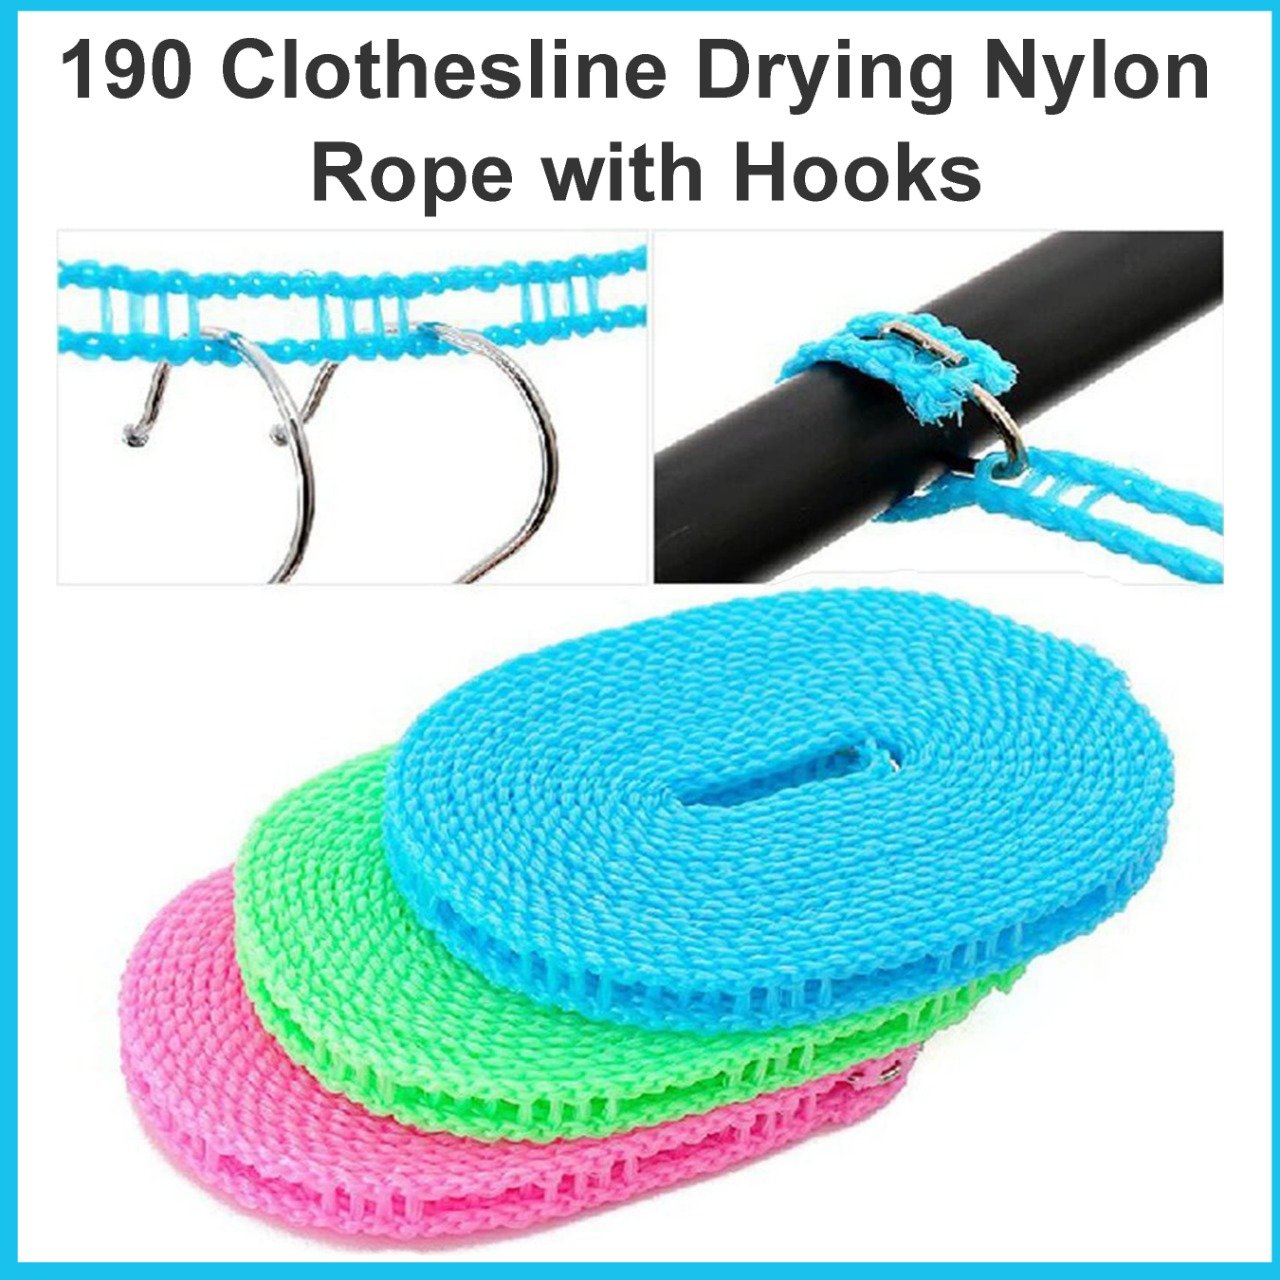 0190 Clothesline Drying Nylon Rope with Hooks - SkyShopy